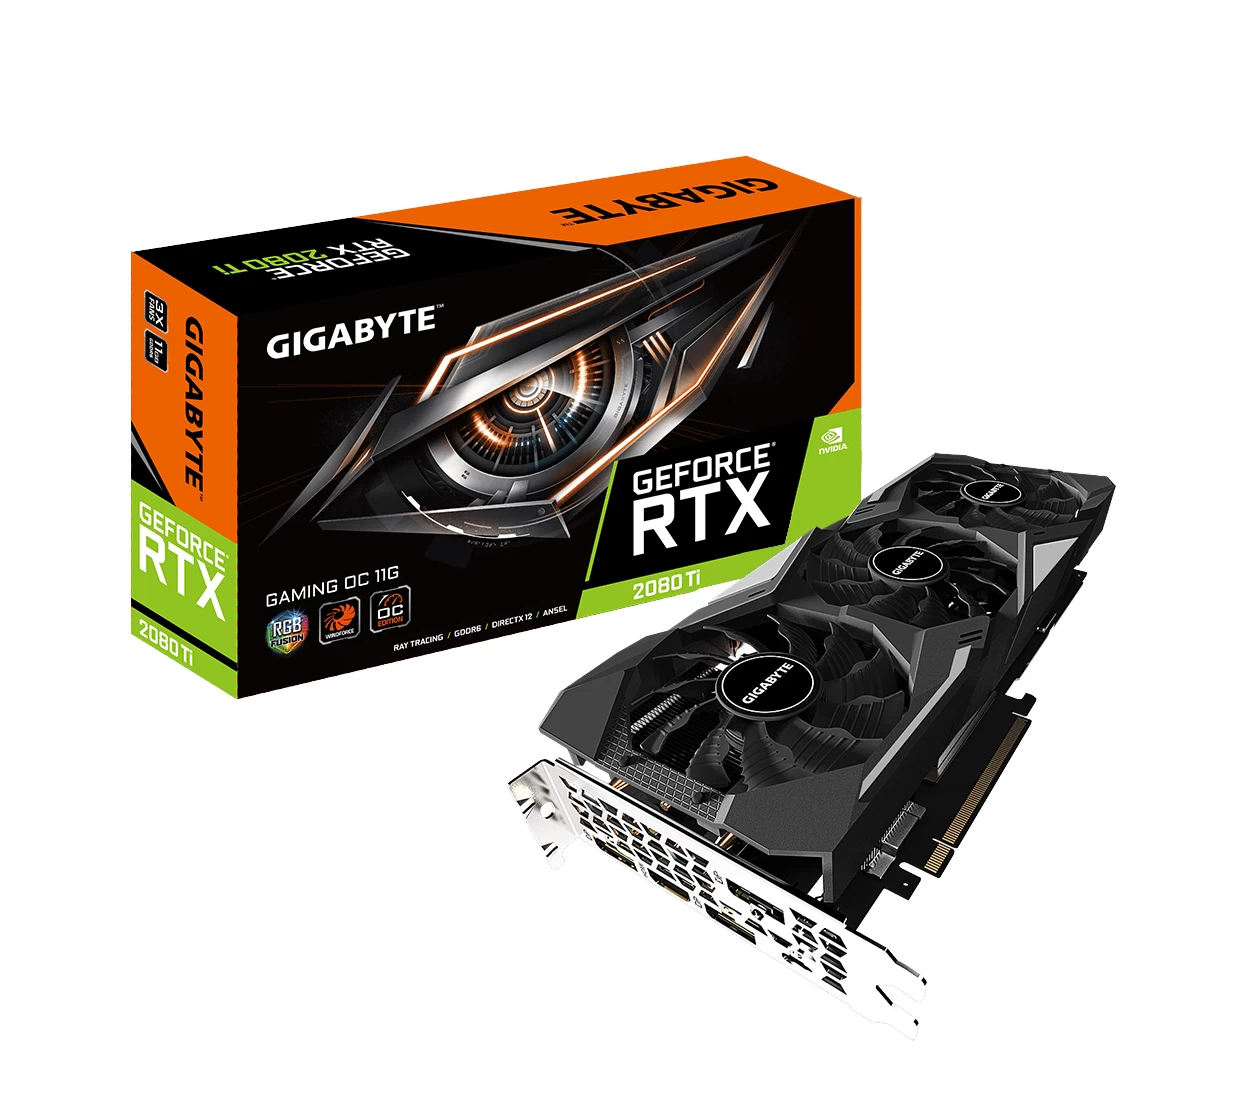 GIGABYTE GeForce RTX 2080 Ti GAMING OC 11G Package